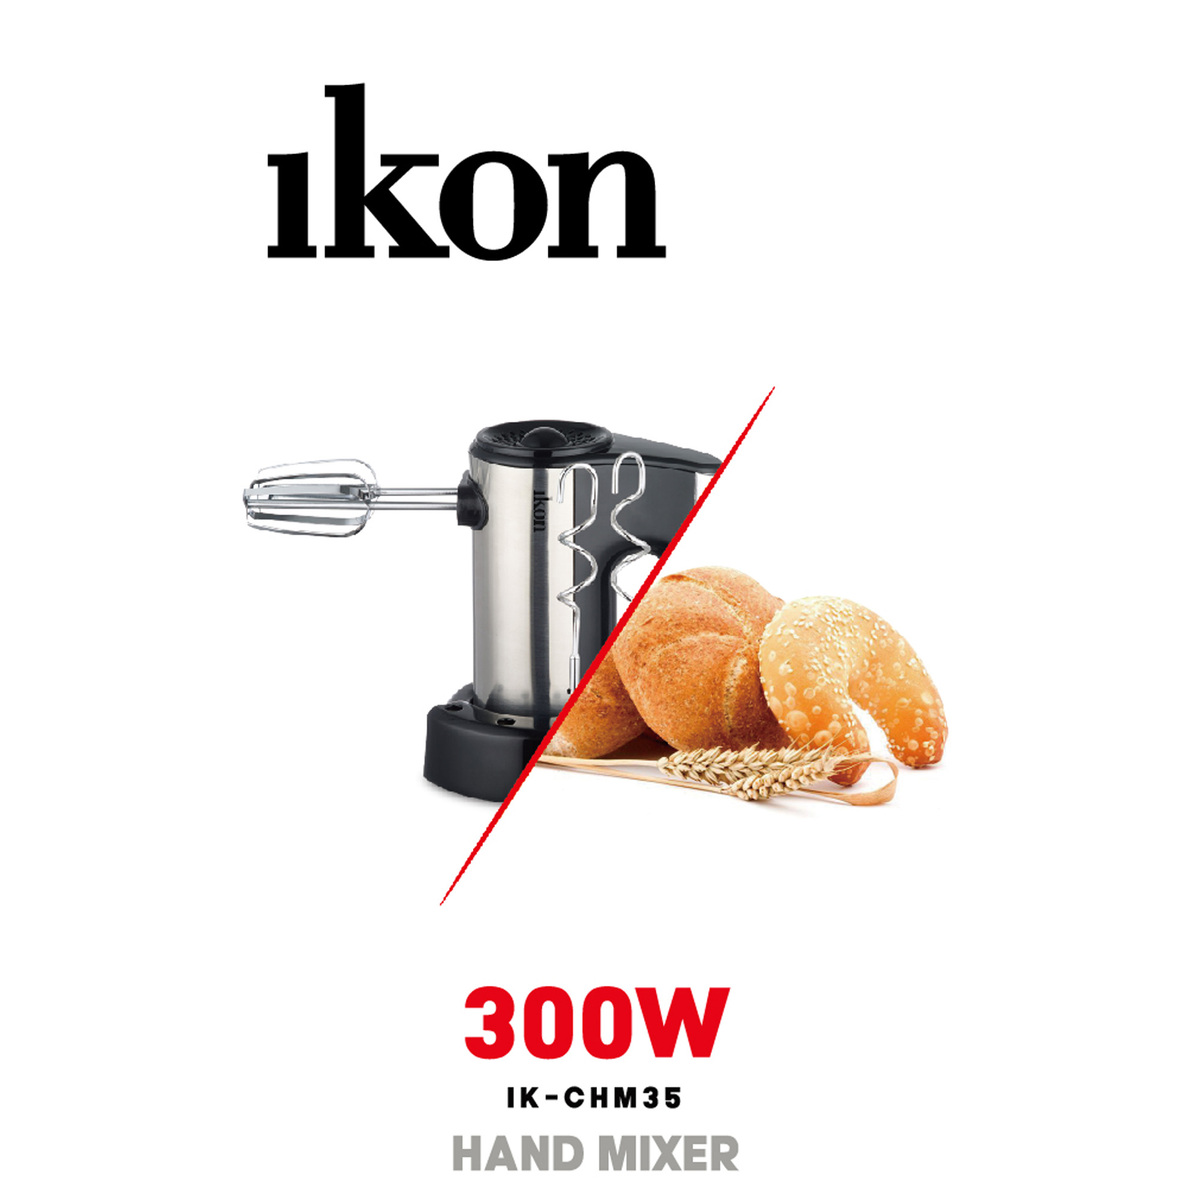 Ikon Hand Mixer, IK-CHM35